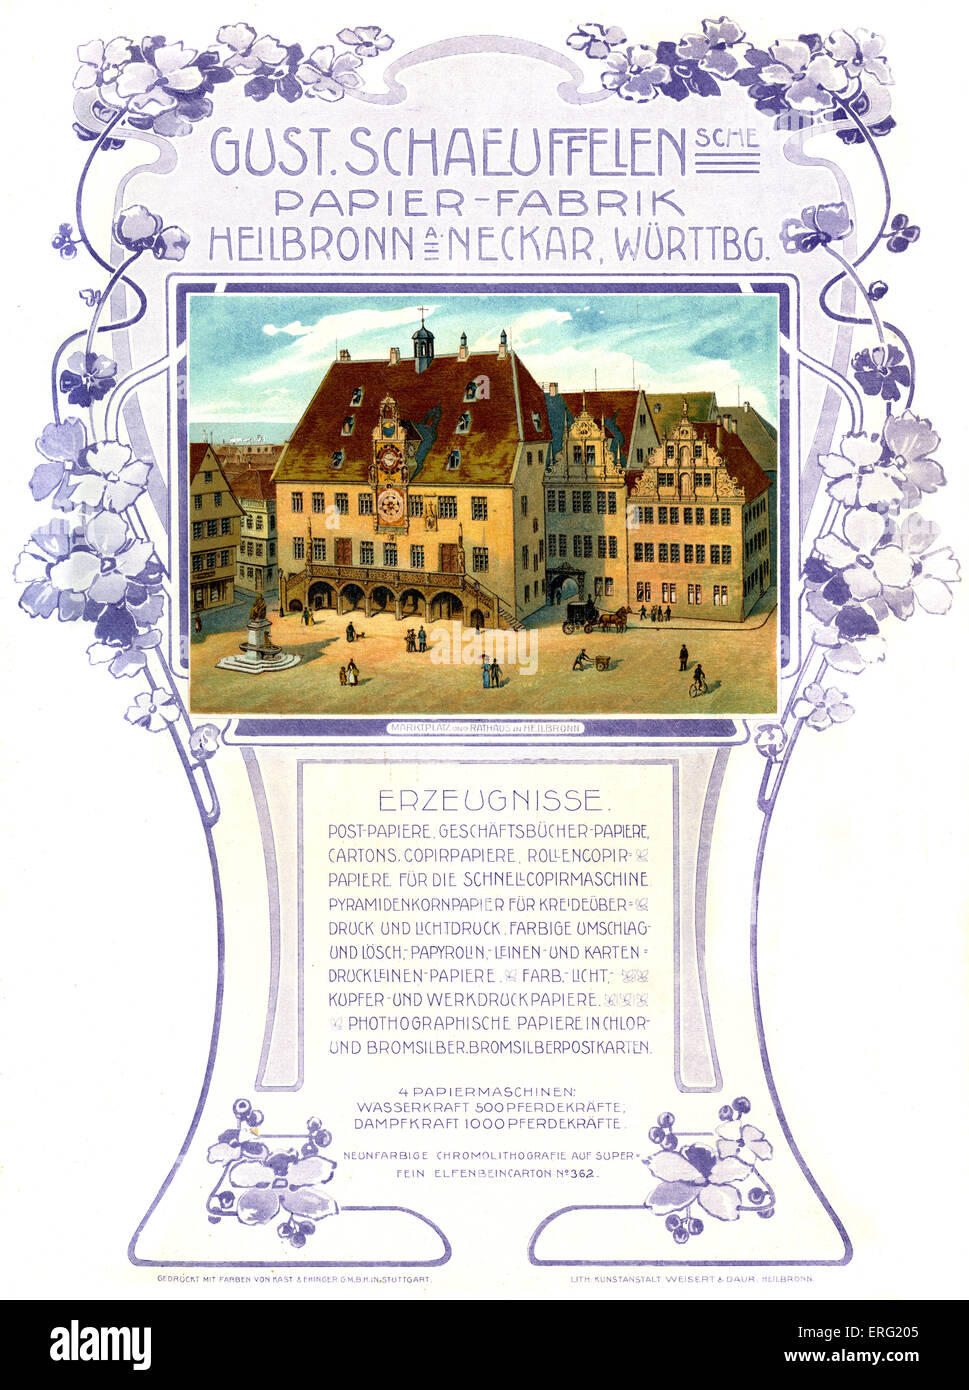 Tedesco annuncio pubblicitario per il Gustav Schäuffelen fabbrica di carta in Heilbron am Neckar, Württemberg. Immagine mostra Heilbron market place Foto Stock